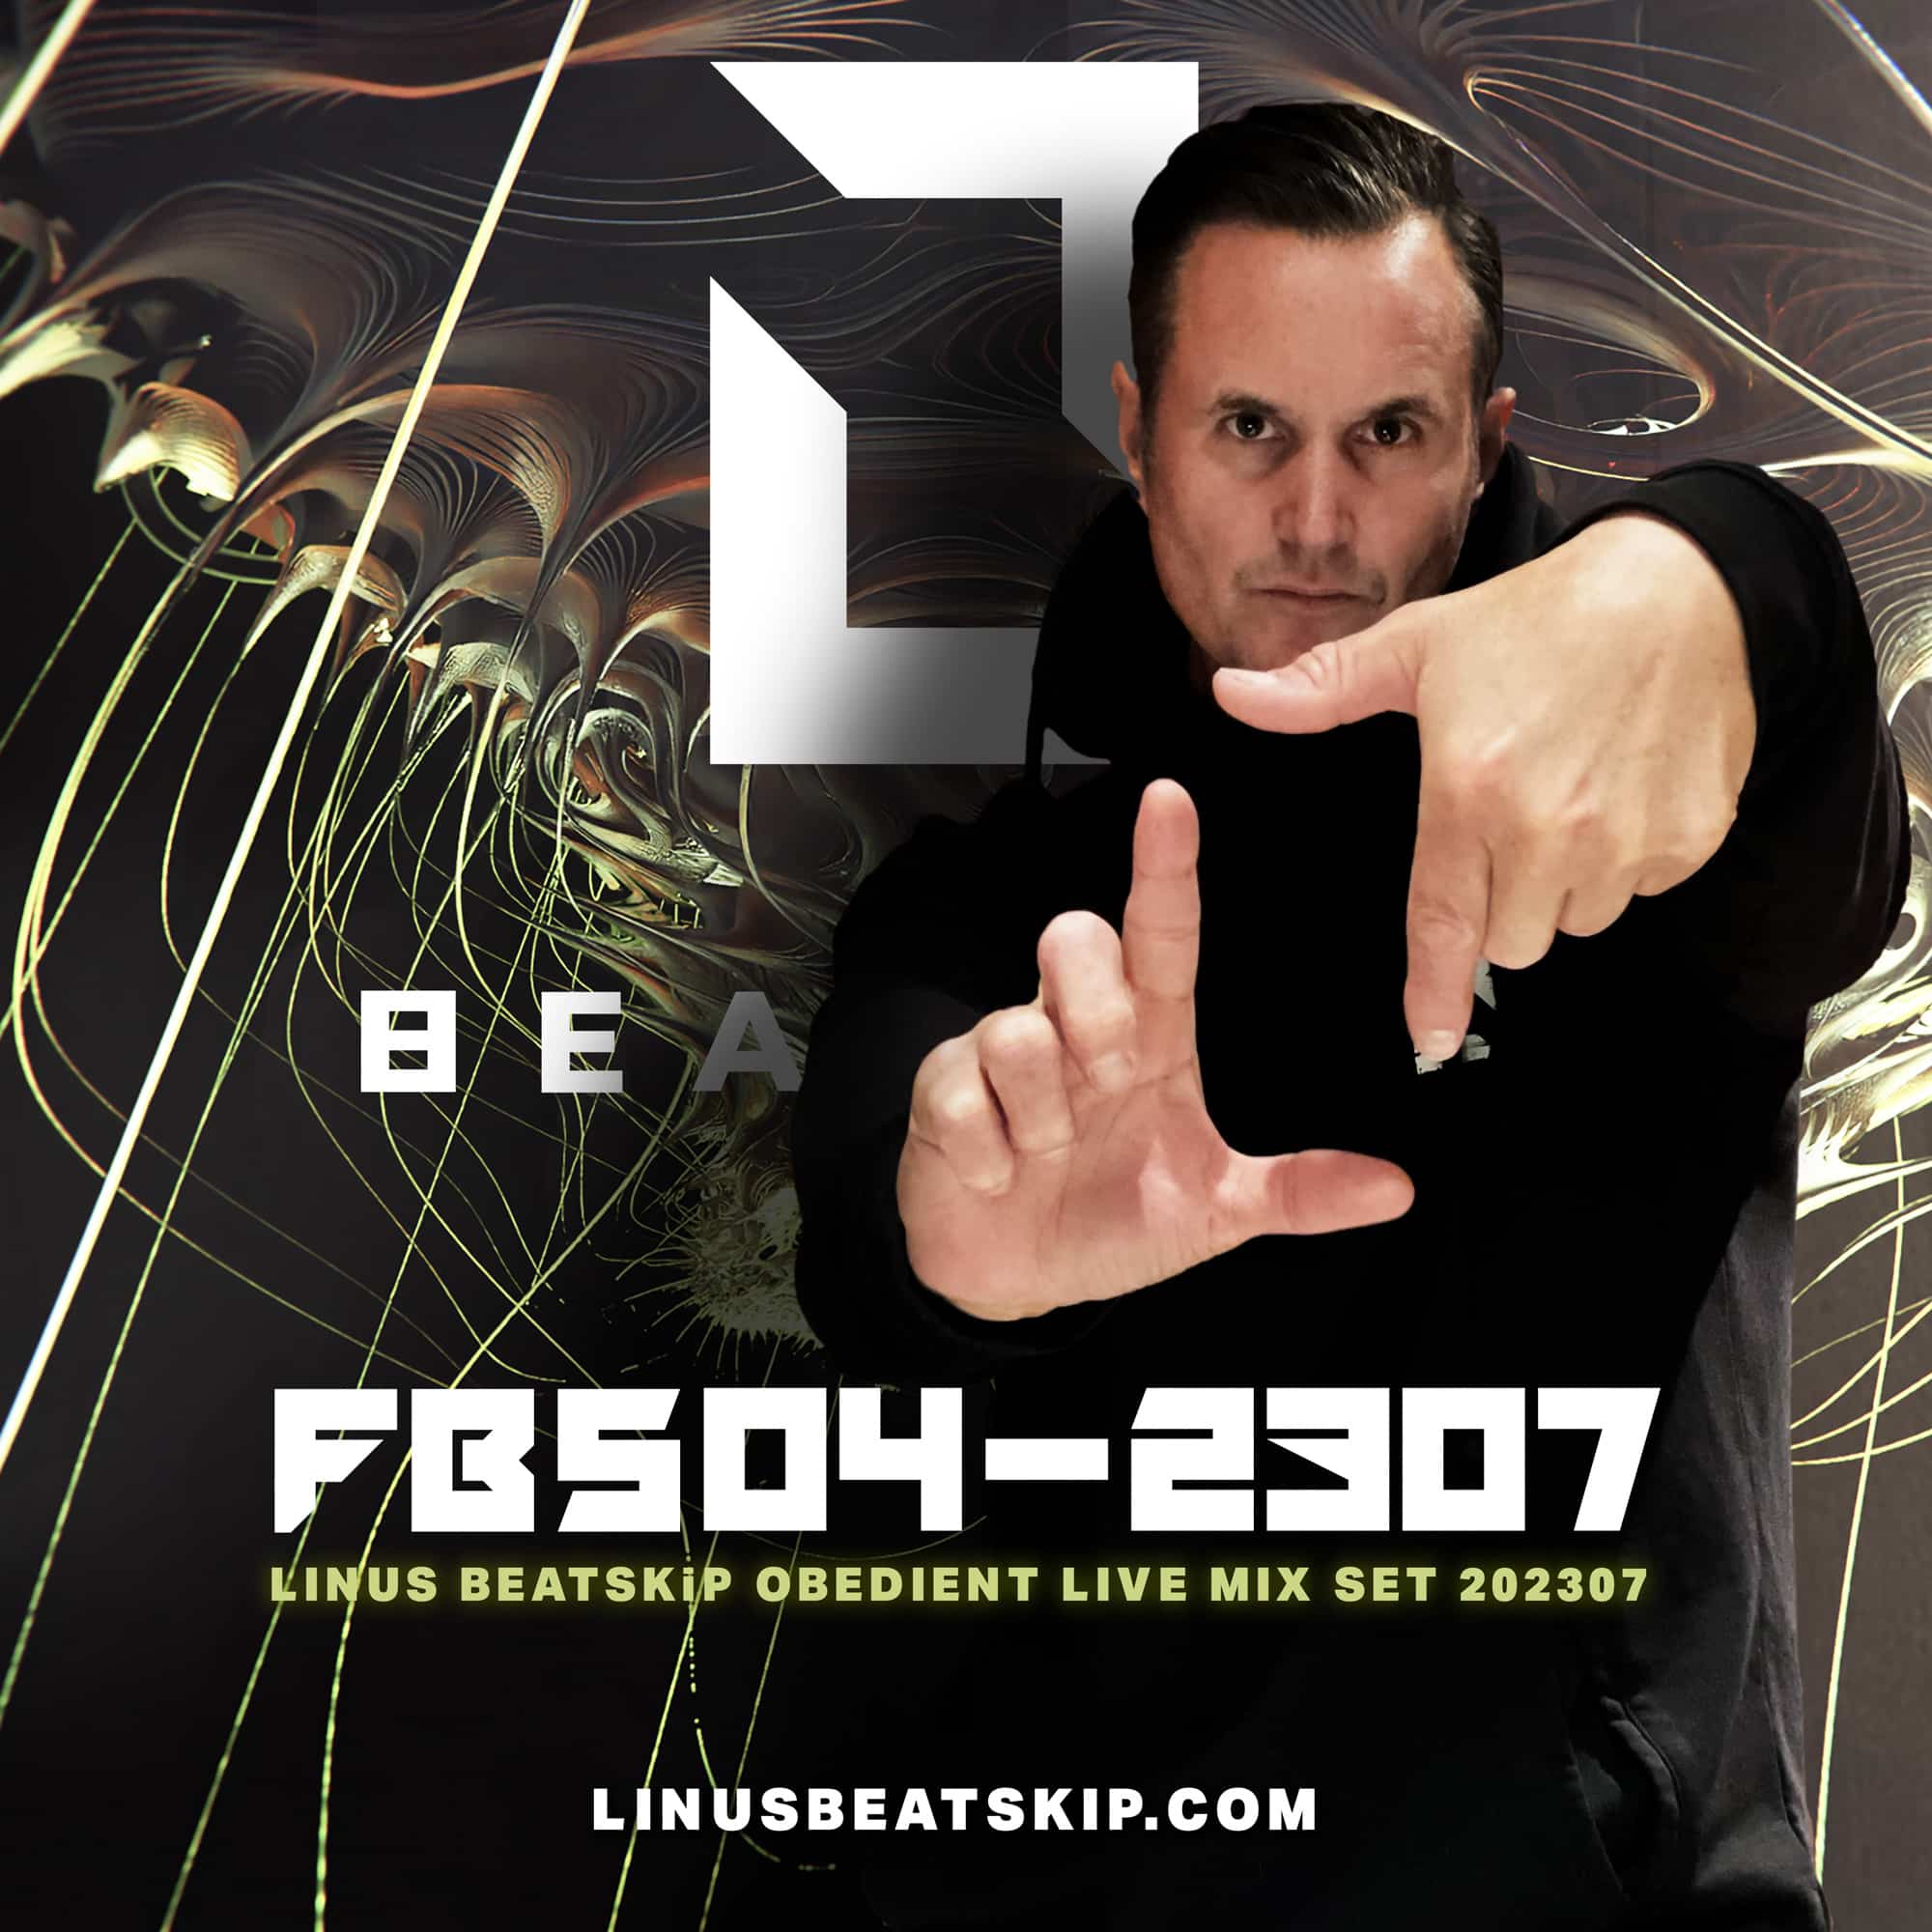 FBS04-2307-linus beatskip Obedient live mix set